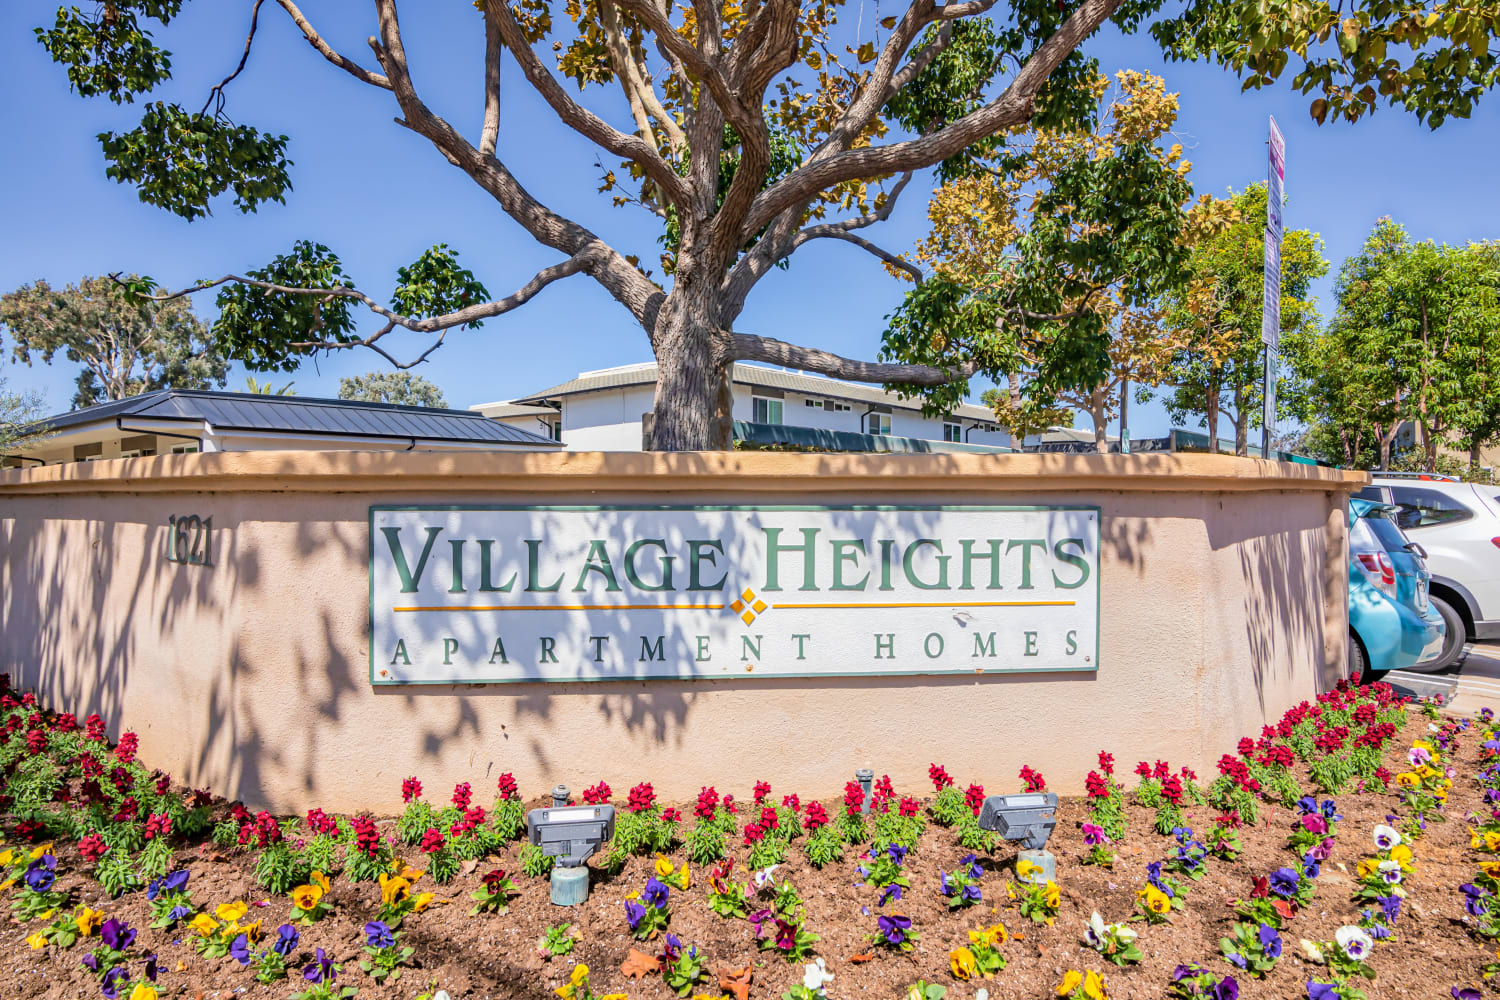 Village Heights apartments in Newport Beach, California